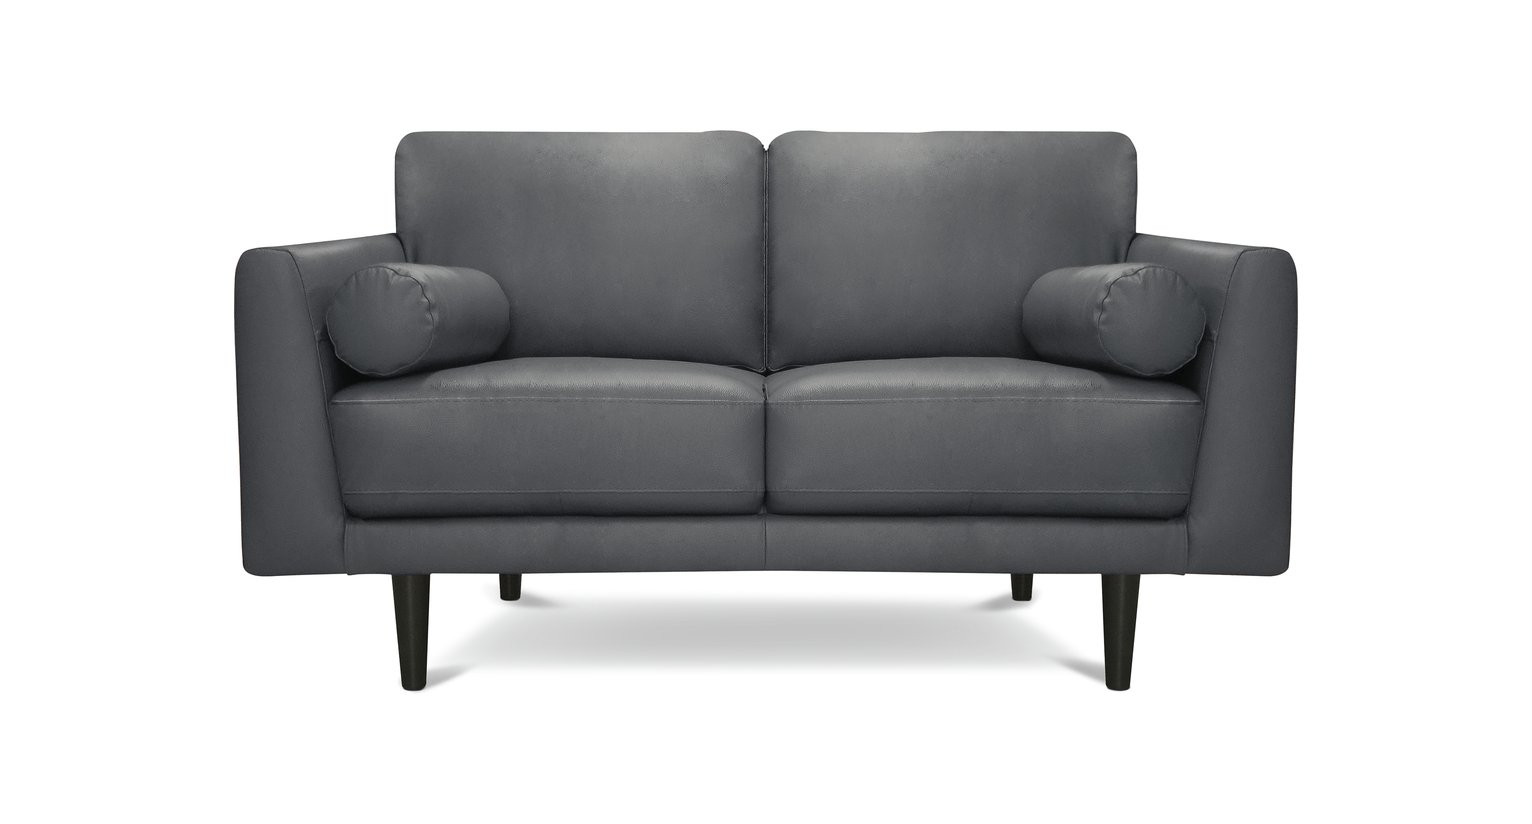 Habitat Jackson Leather 2 Seater Sofa - Grey